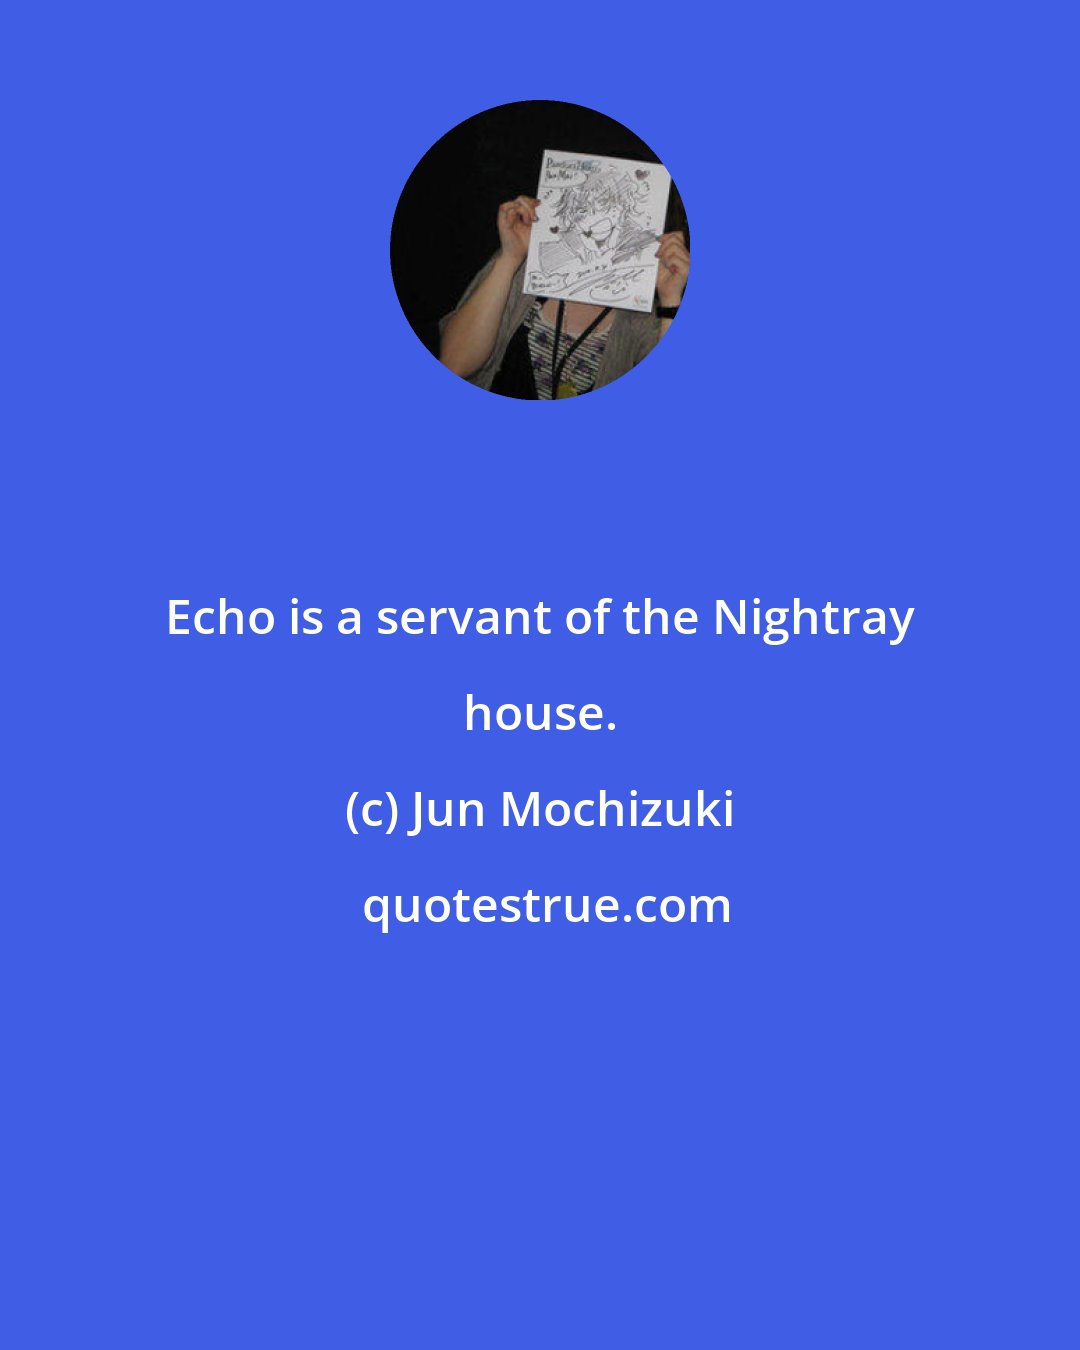 Jun Mochizuki: Echo is a servant of the Nightray house.